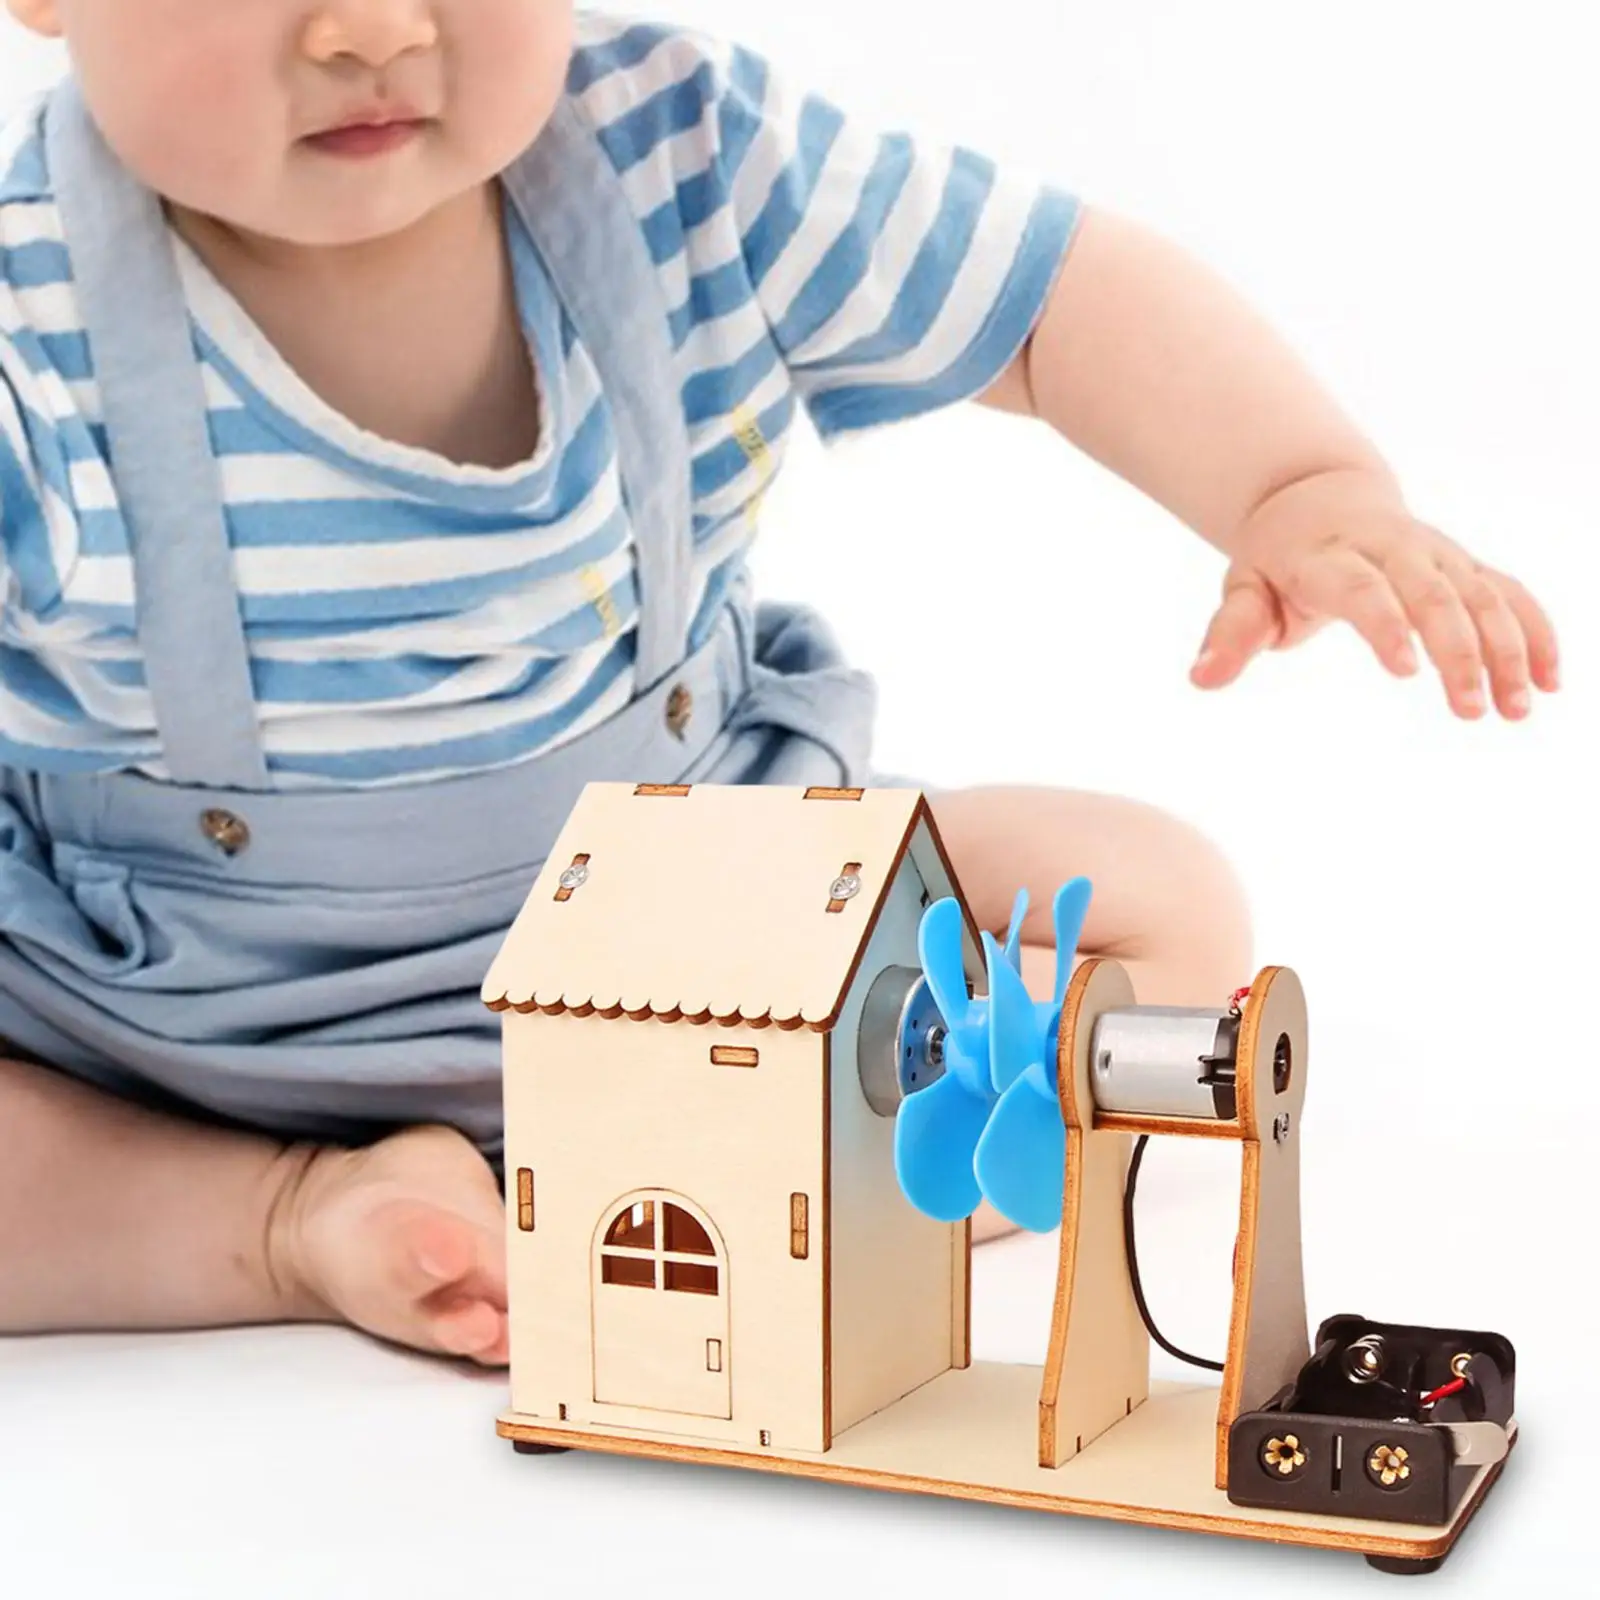 

DIY Toys Wind Turbine Generator Electronic Toys for Boys Kids Birthday Gifts